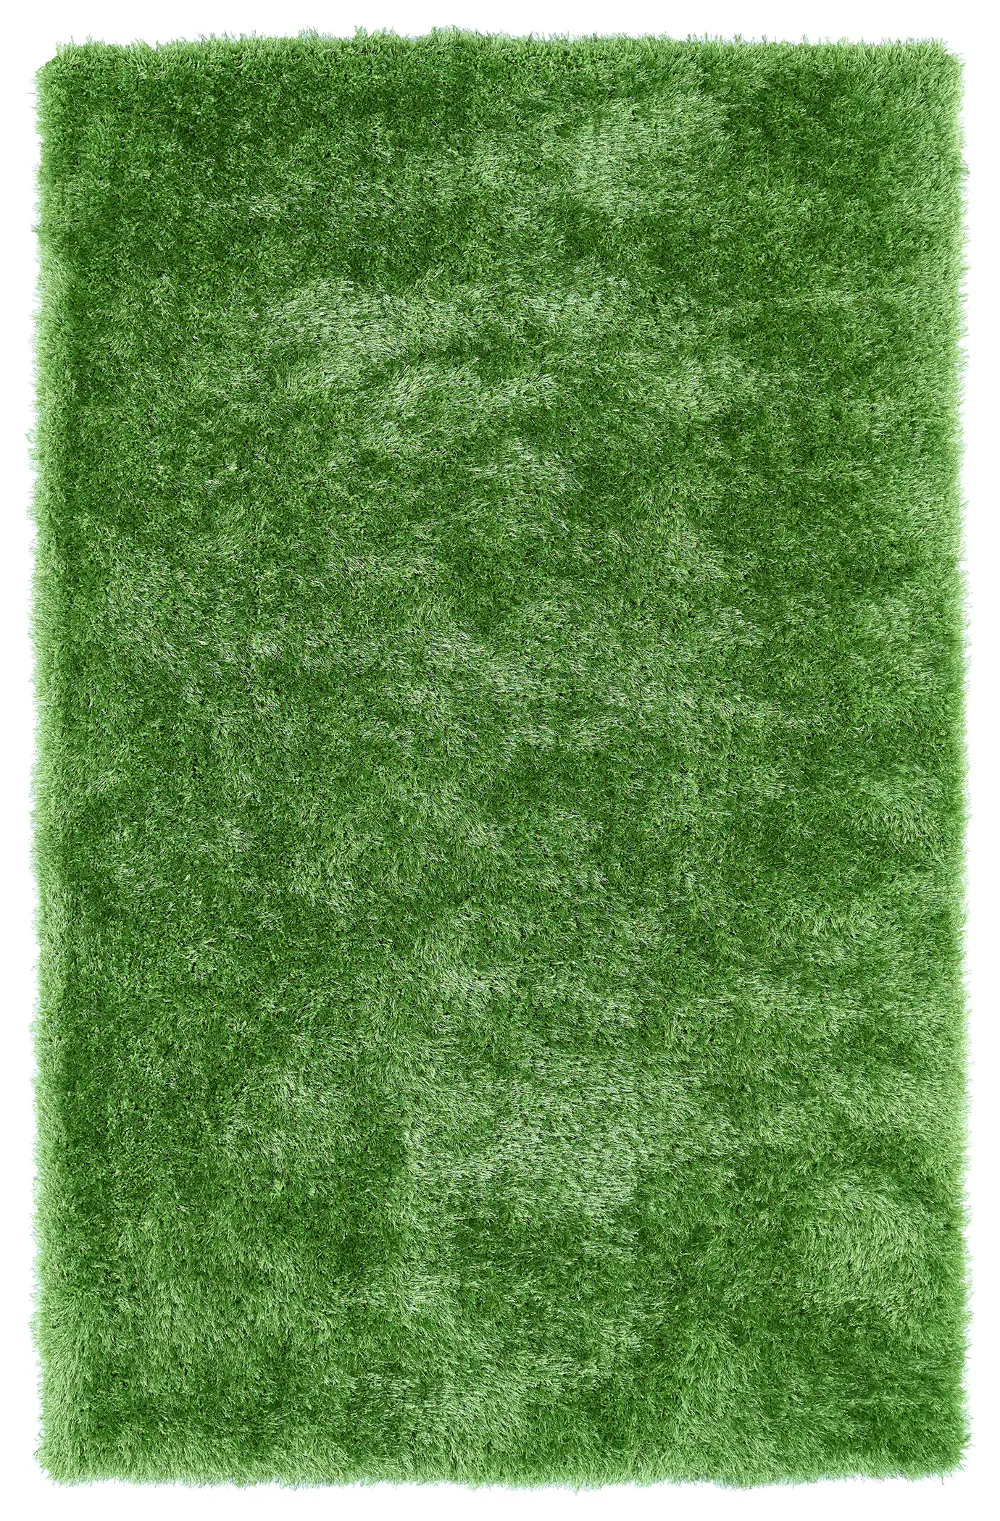 5 x 7 Medium Lime Green Shag Rug - Posh-1